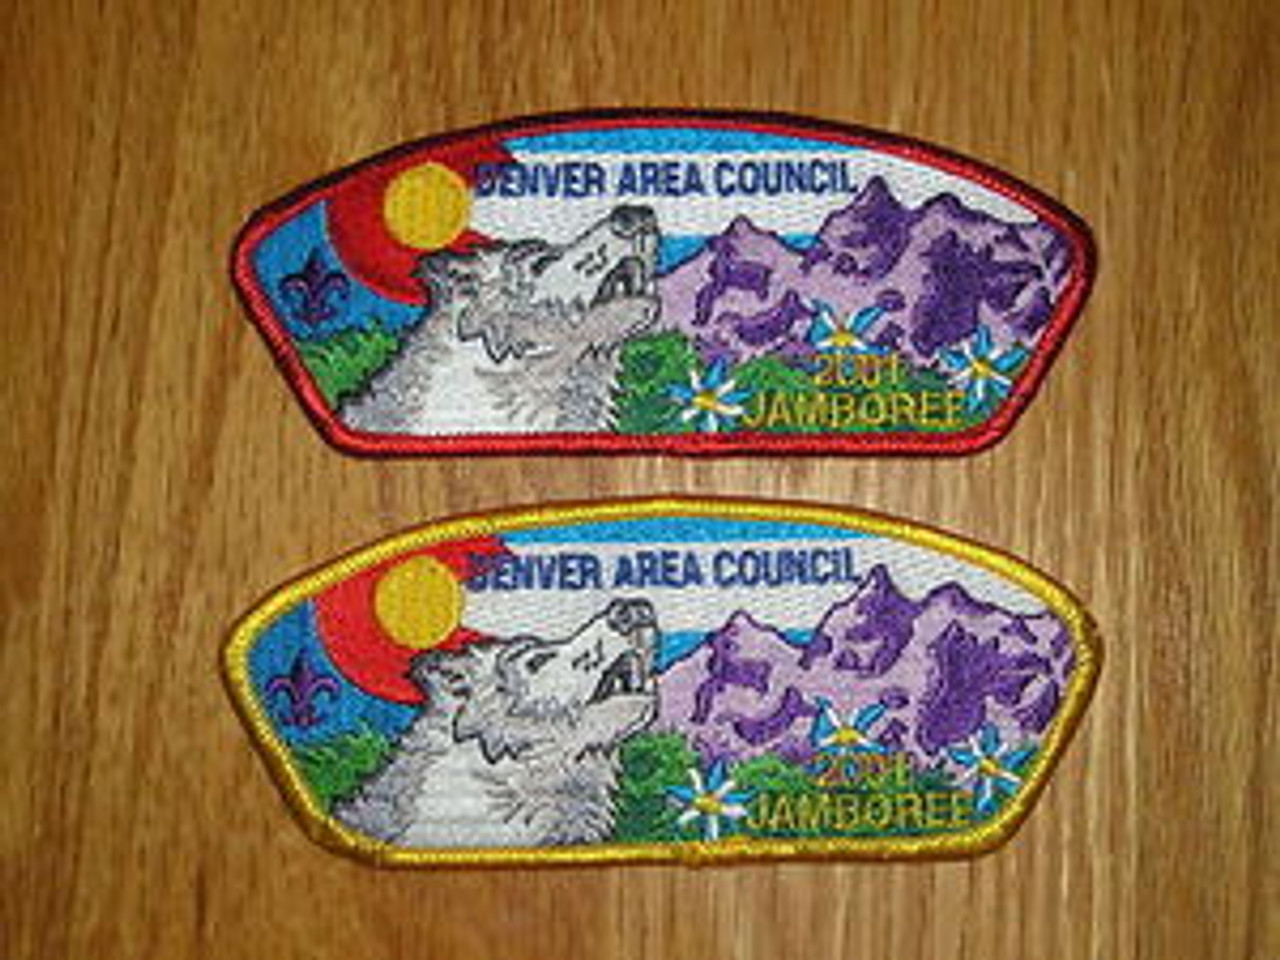 2001 National Jamboree JSP - Denver Area Council-2 diff